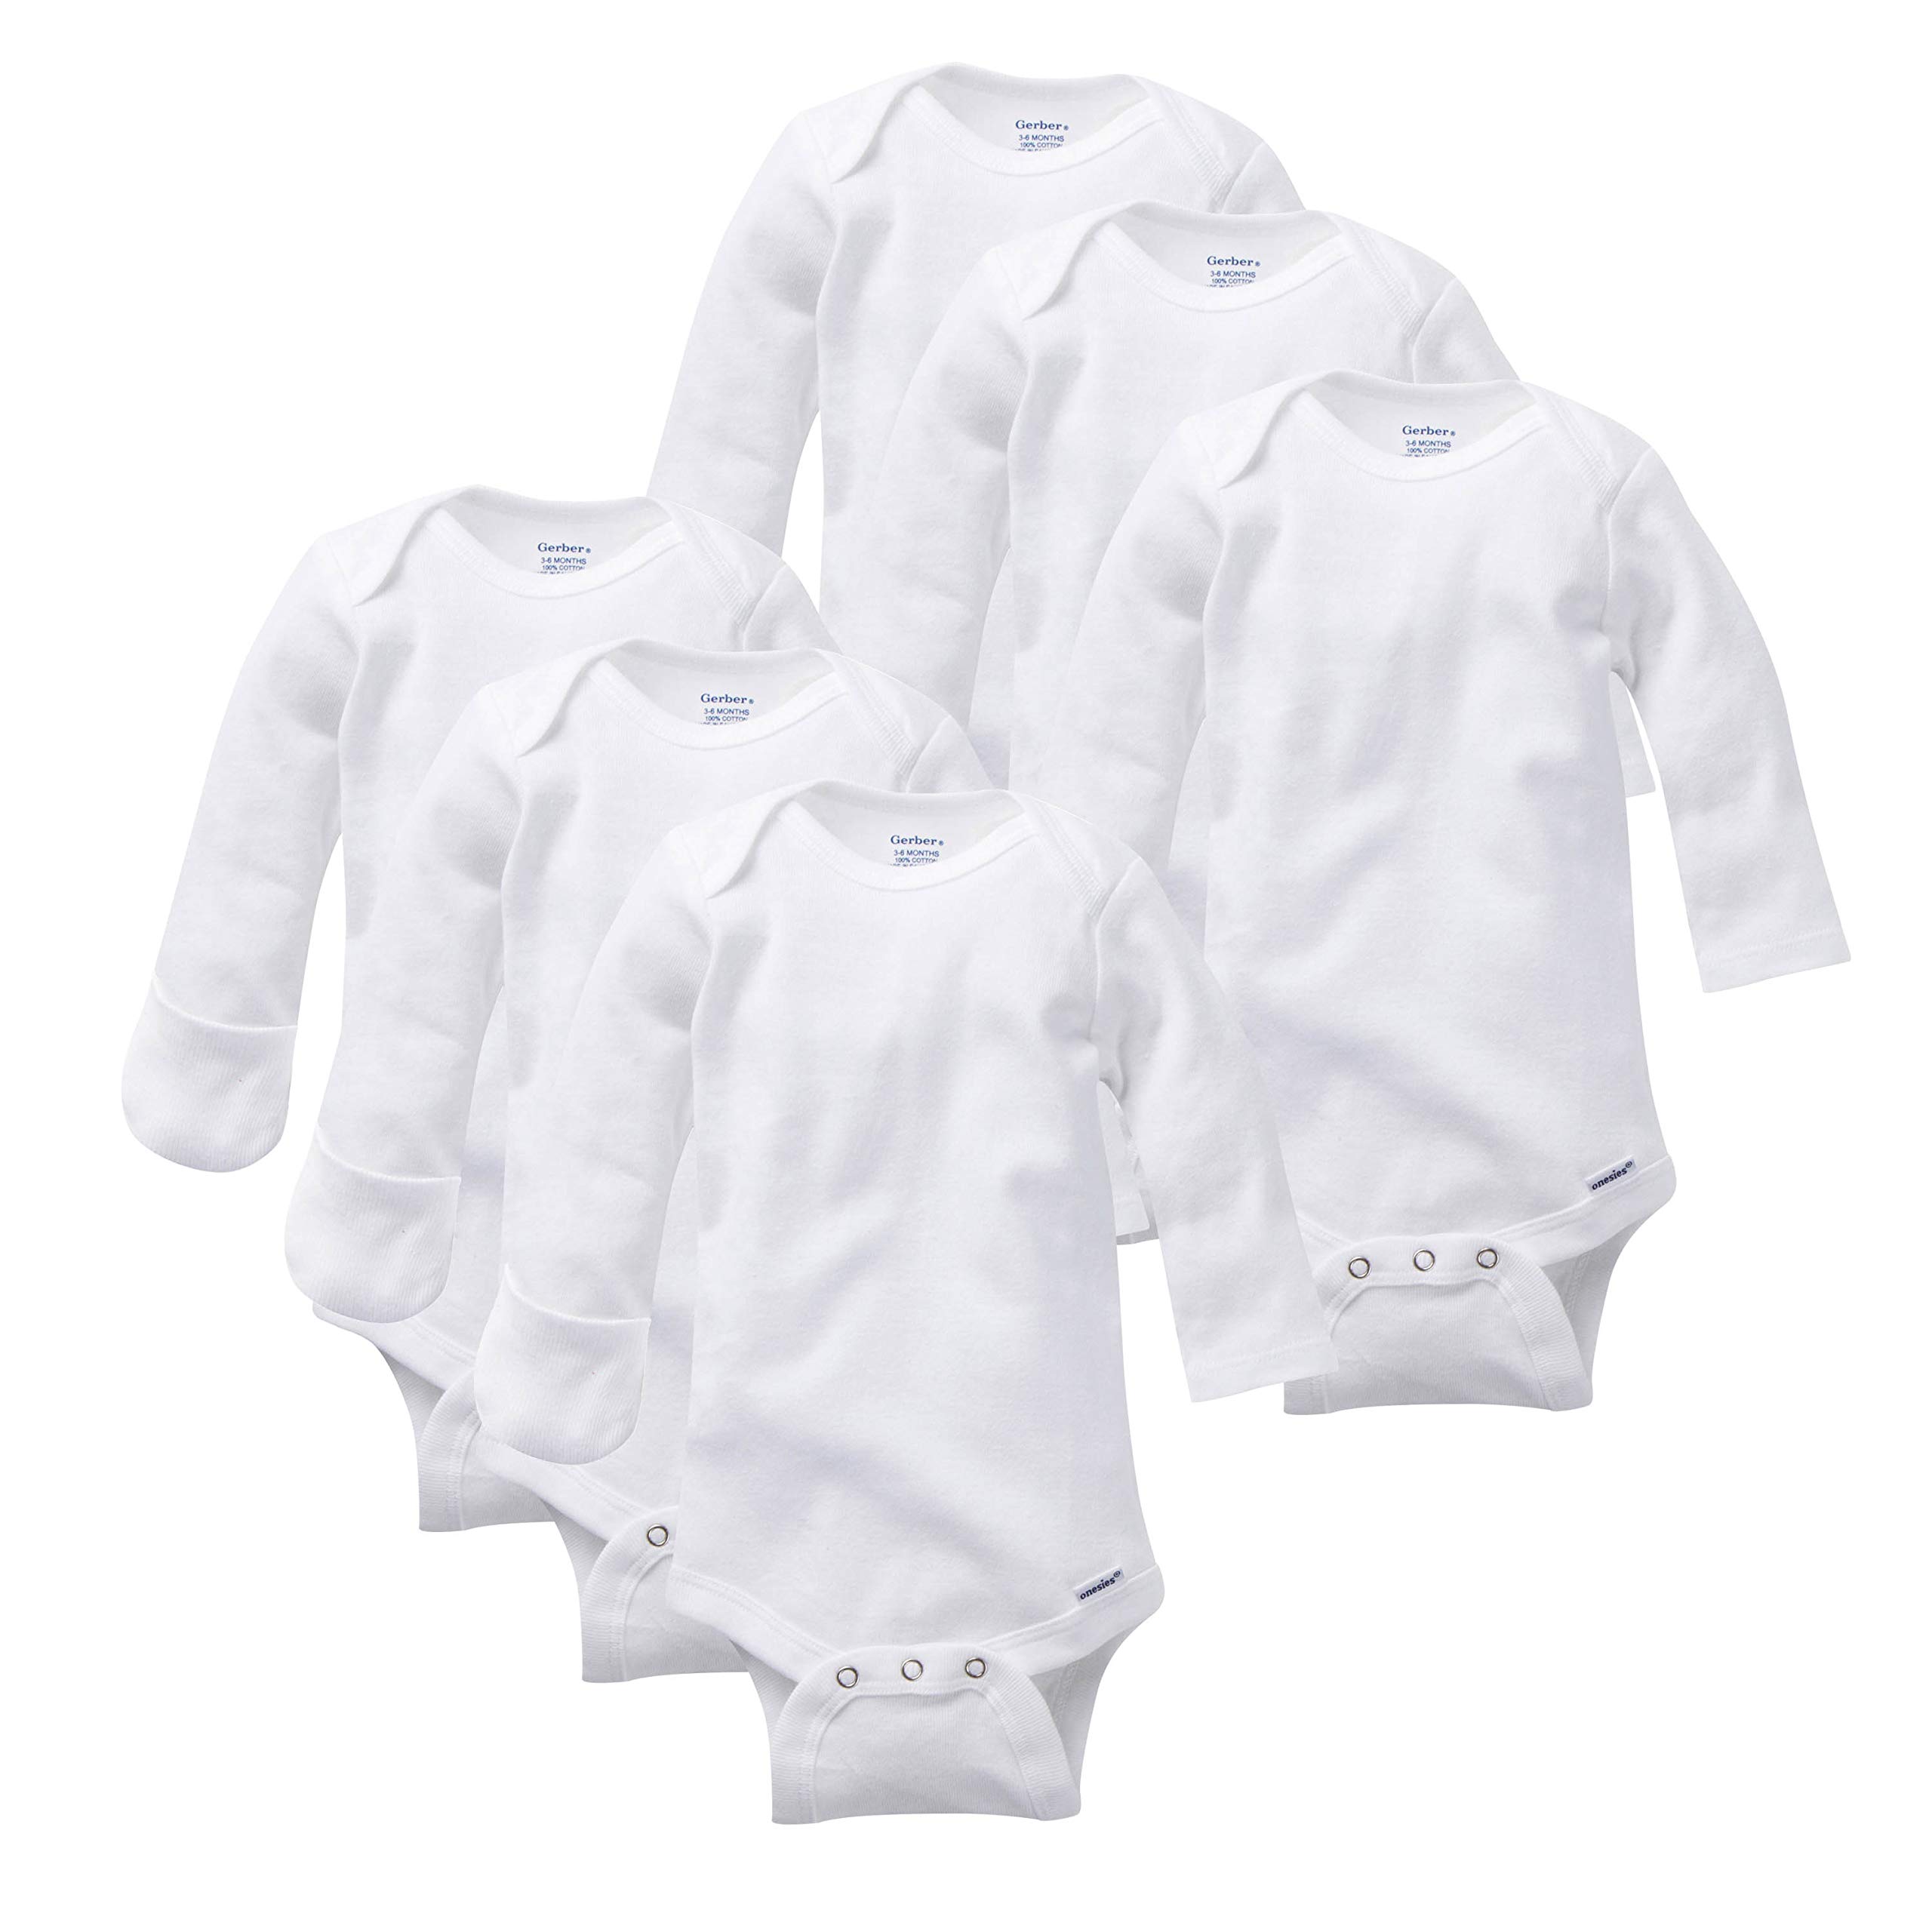 Gerber unisex-baby Multi-pack Long-sleeve Onesies Bodysuit Mitten Cuff Sizes